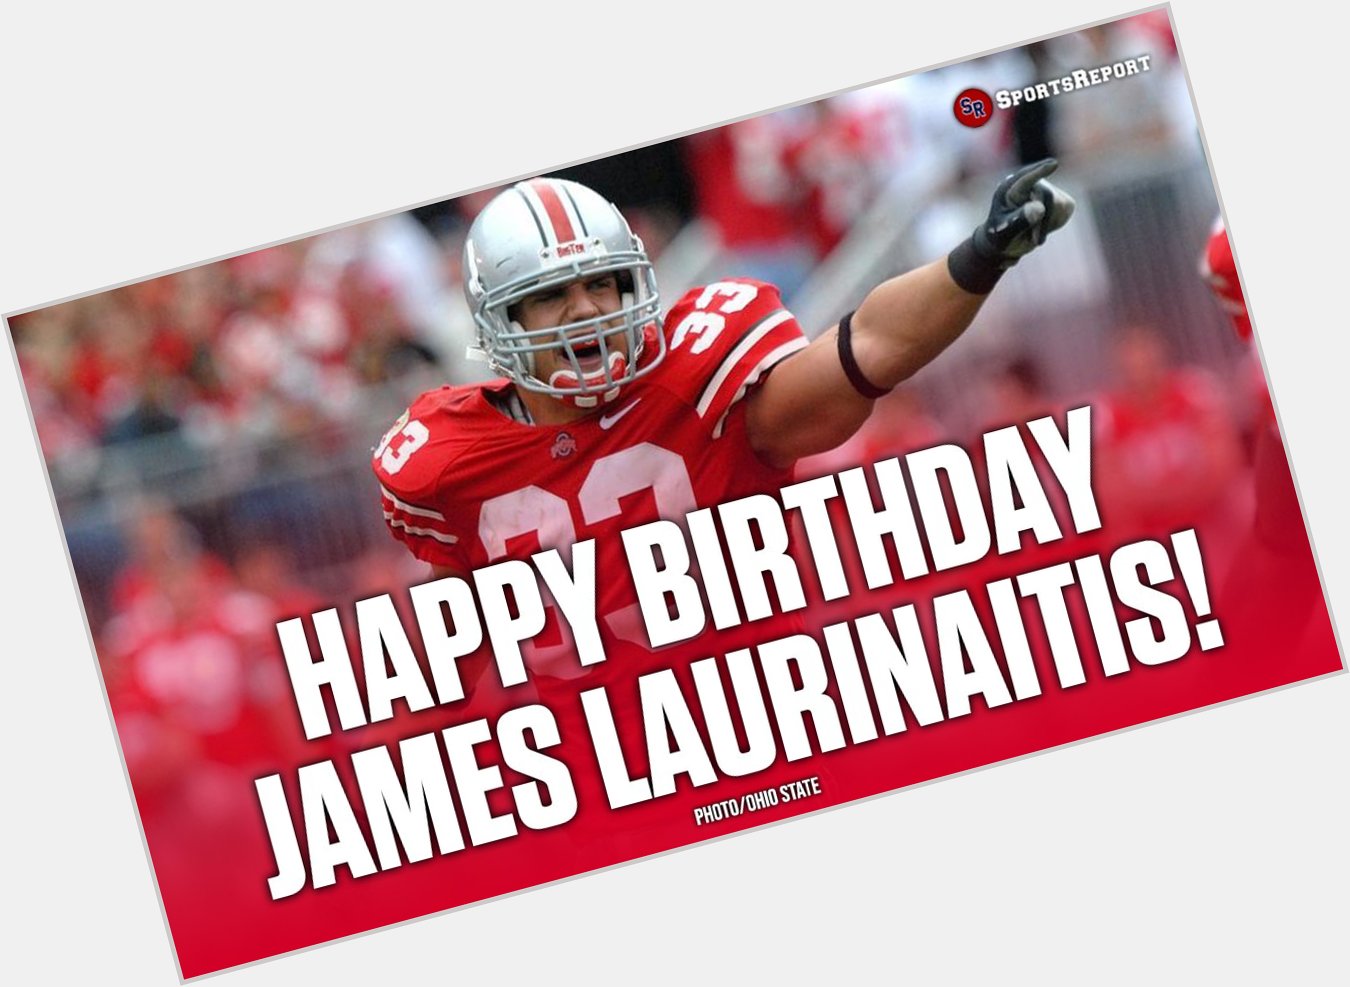  Fans, let\s wish legend James Laurinaitis a Happy Birthday! GO 